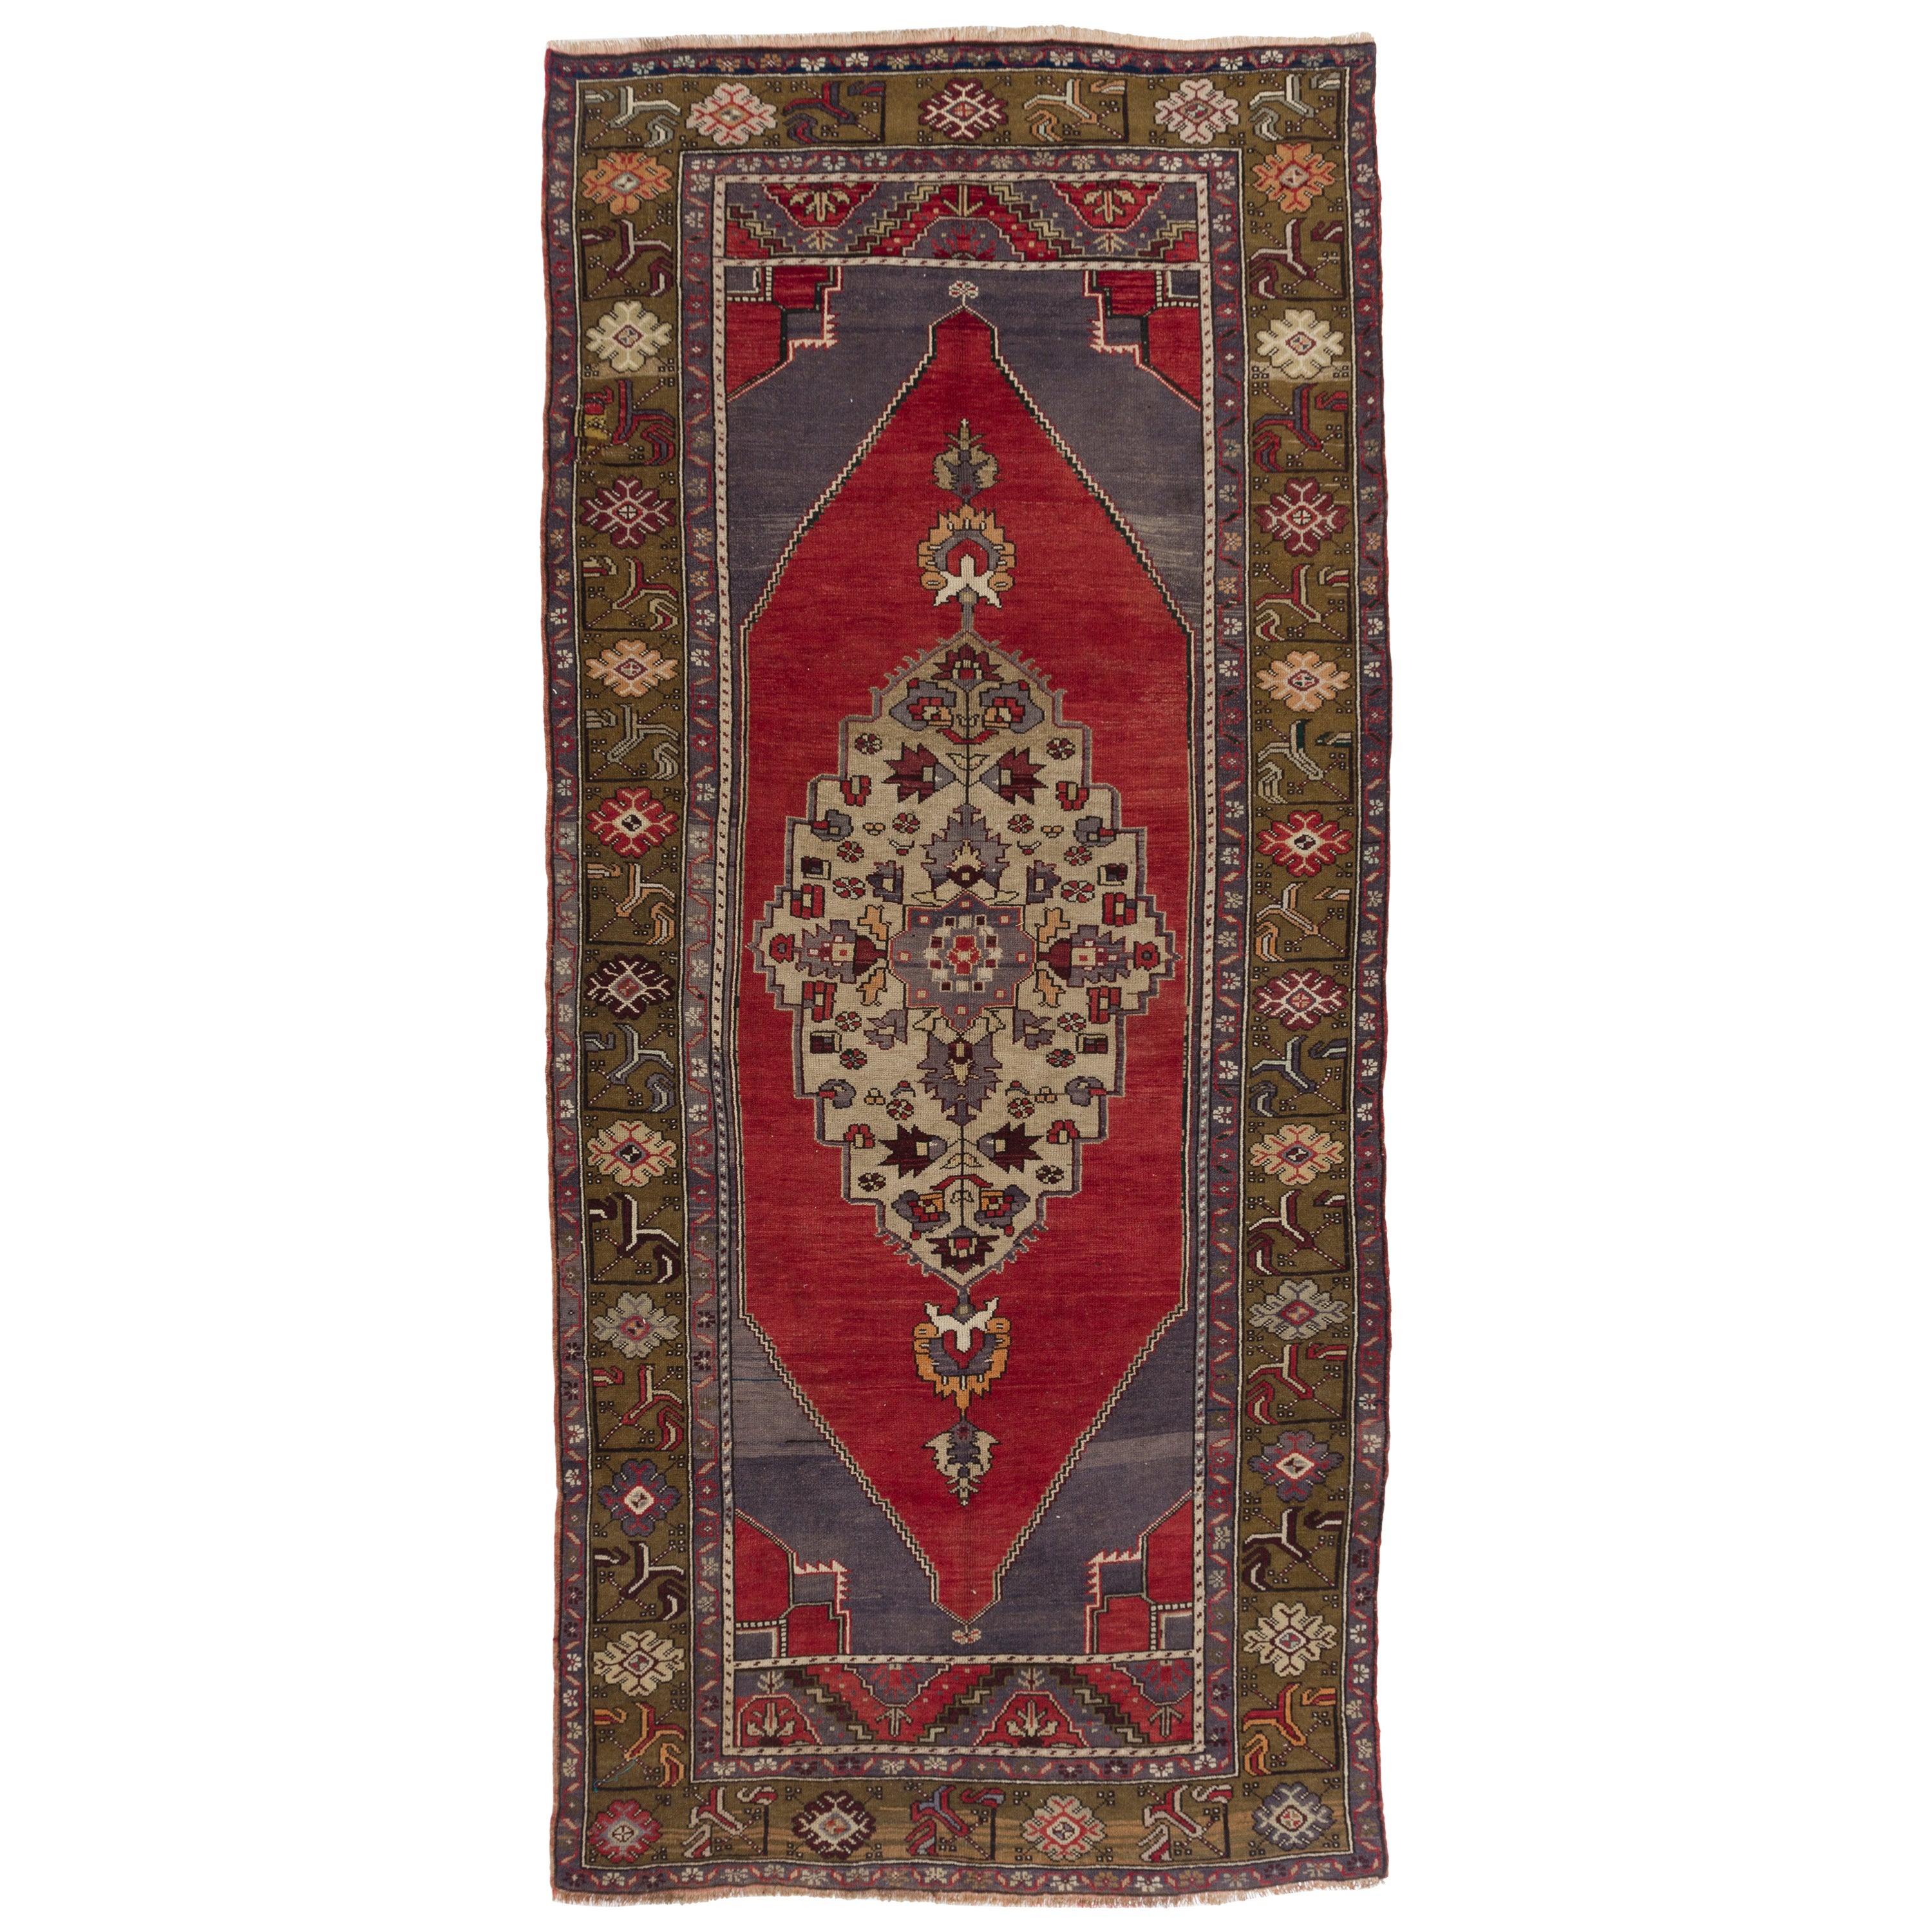 5x11 Ft Vintage Oriental Rug, One of a Kind Turkish Village Wool Carpet in Red